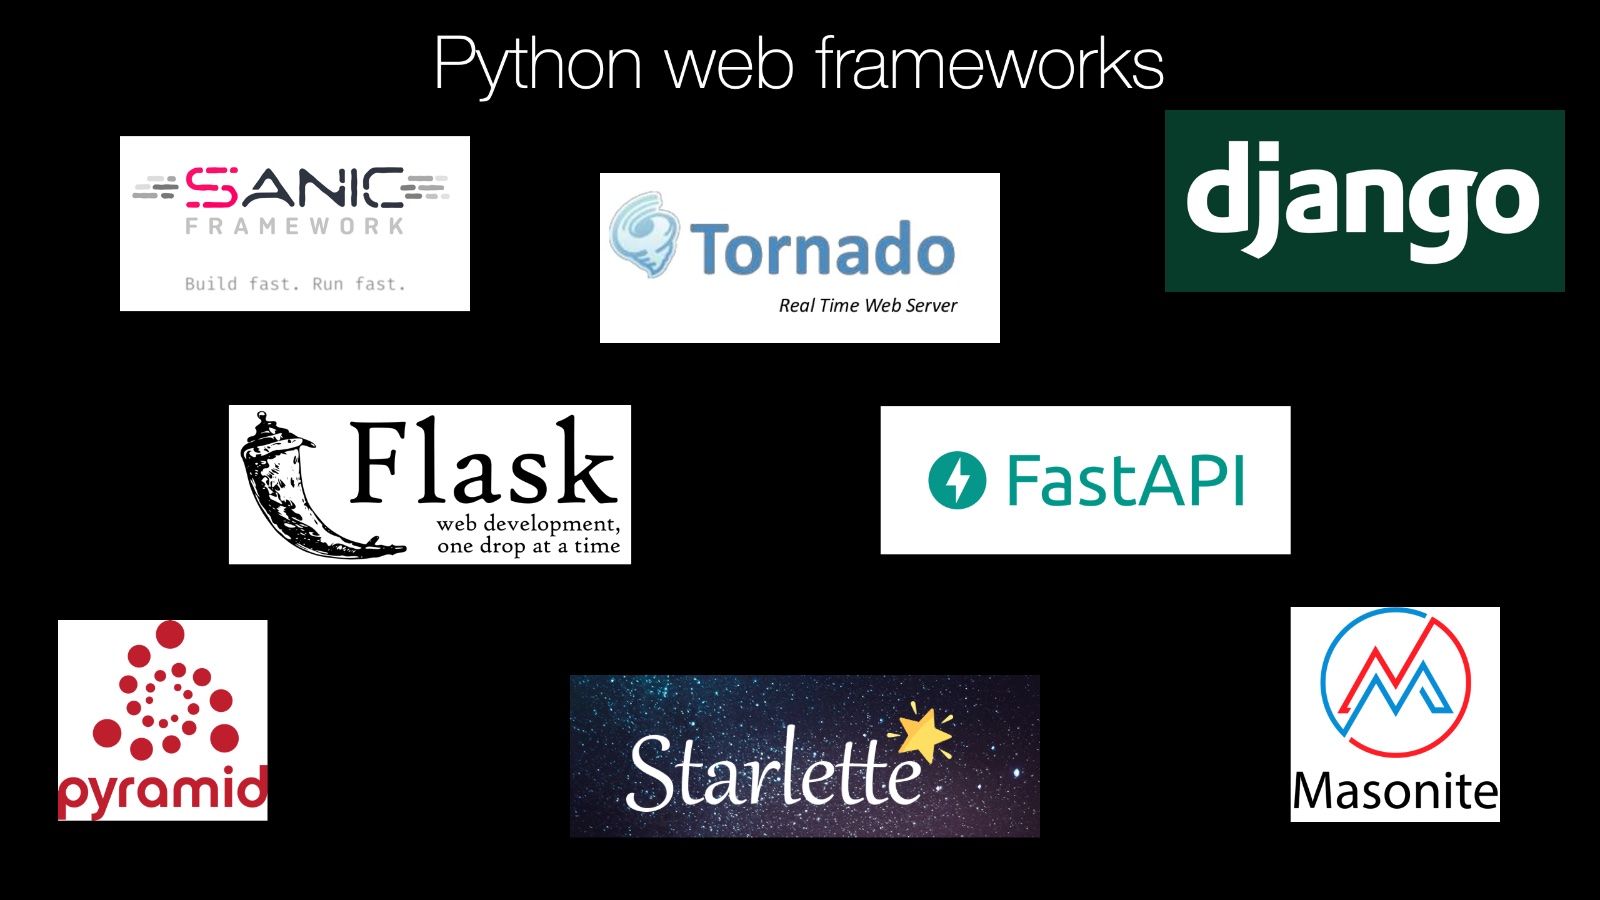 Image introducing Python web frameworks